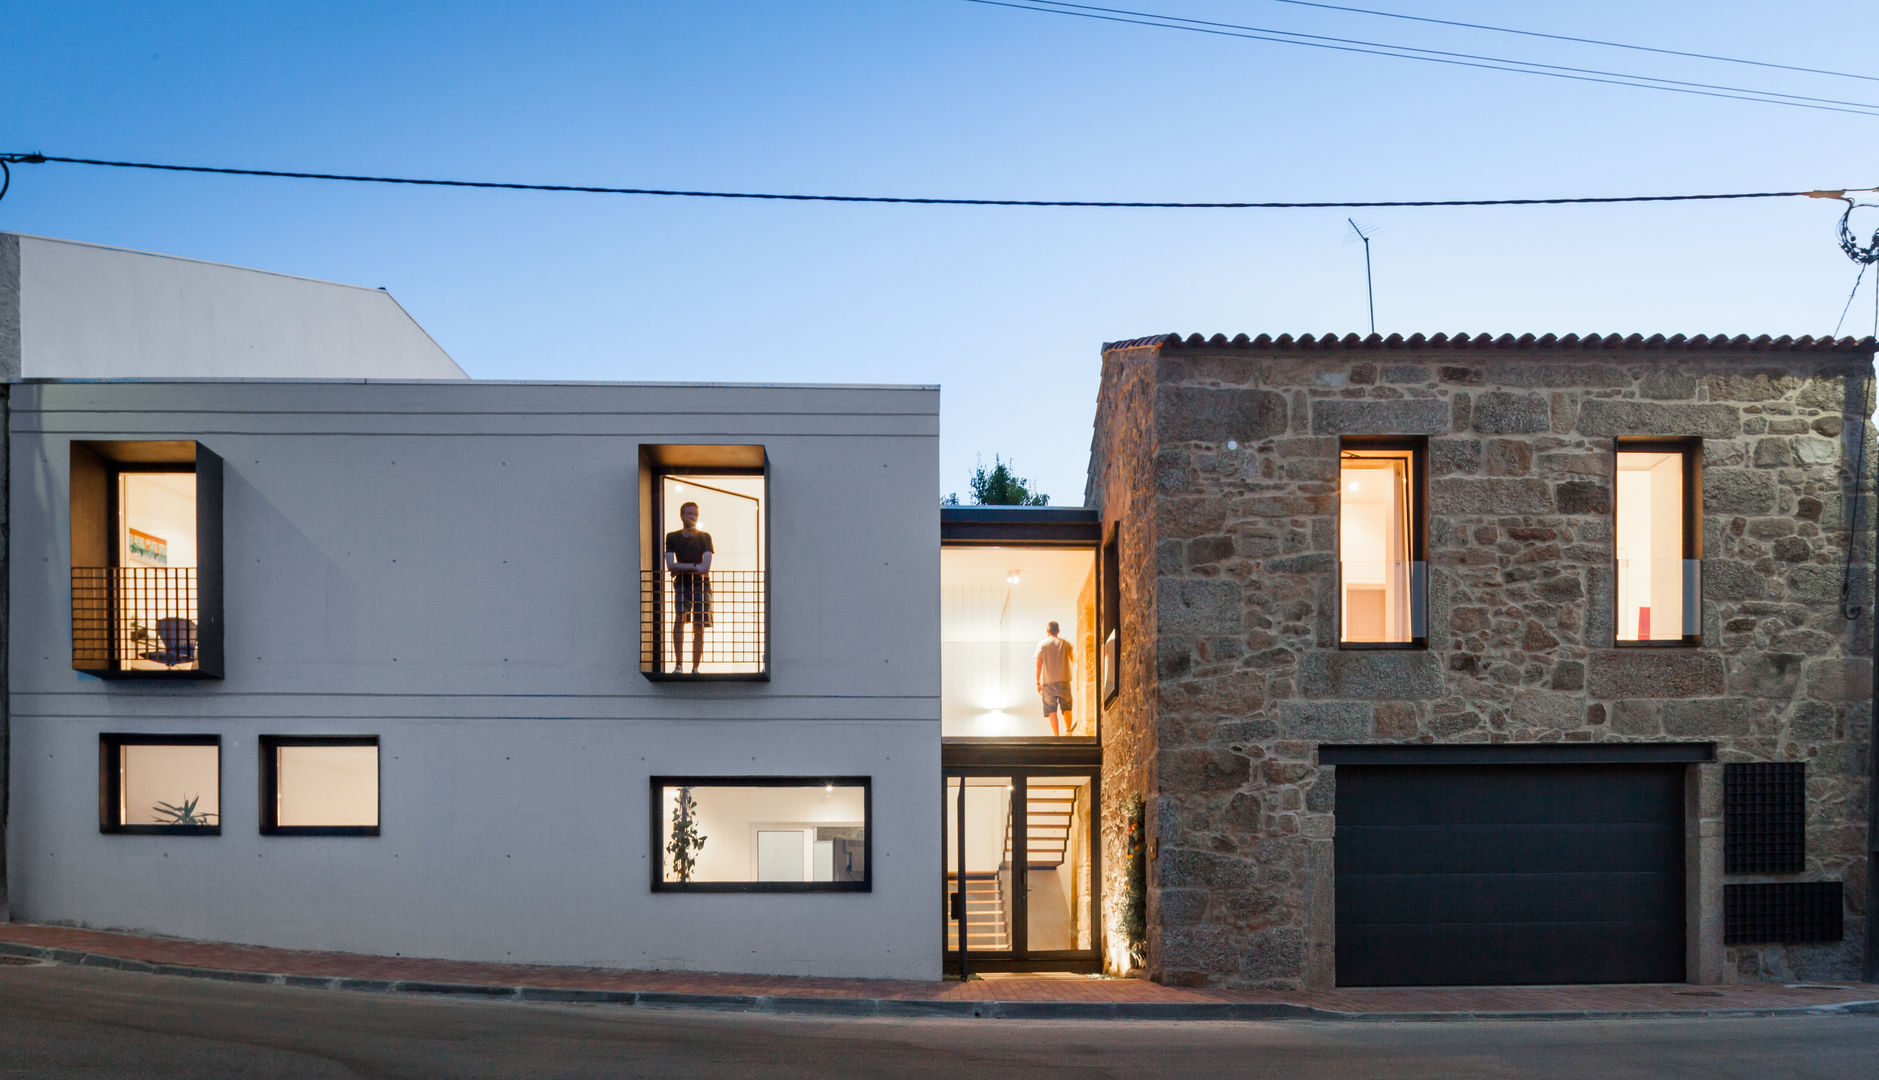 House JA - designed by Filipe Pina and Inês Costa., Joao Morgado - Architectural Photography Joao Morgado - Architectural Photography Rooms